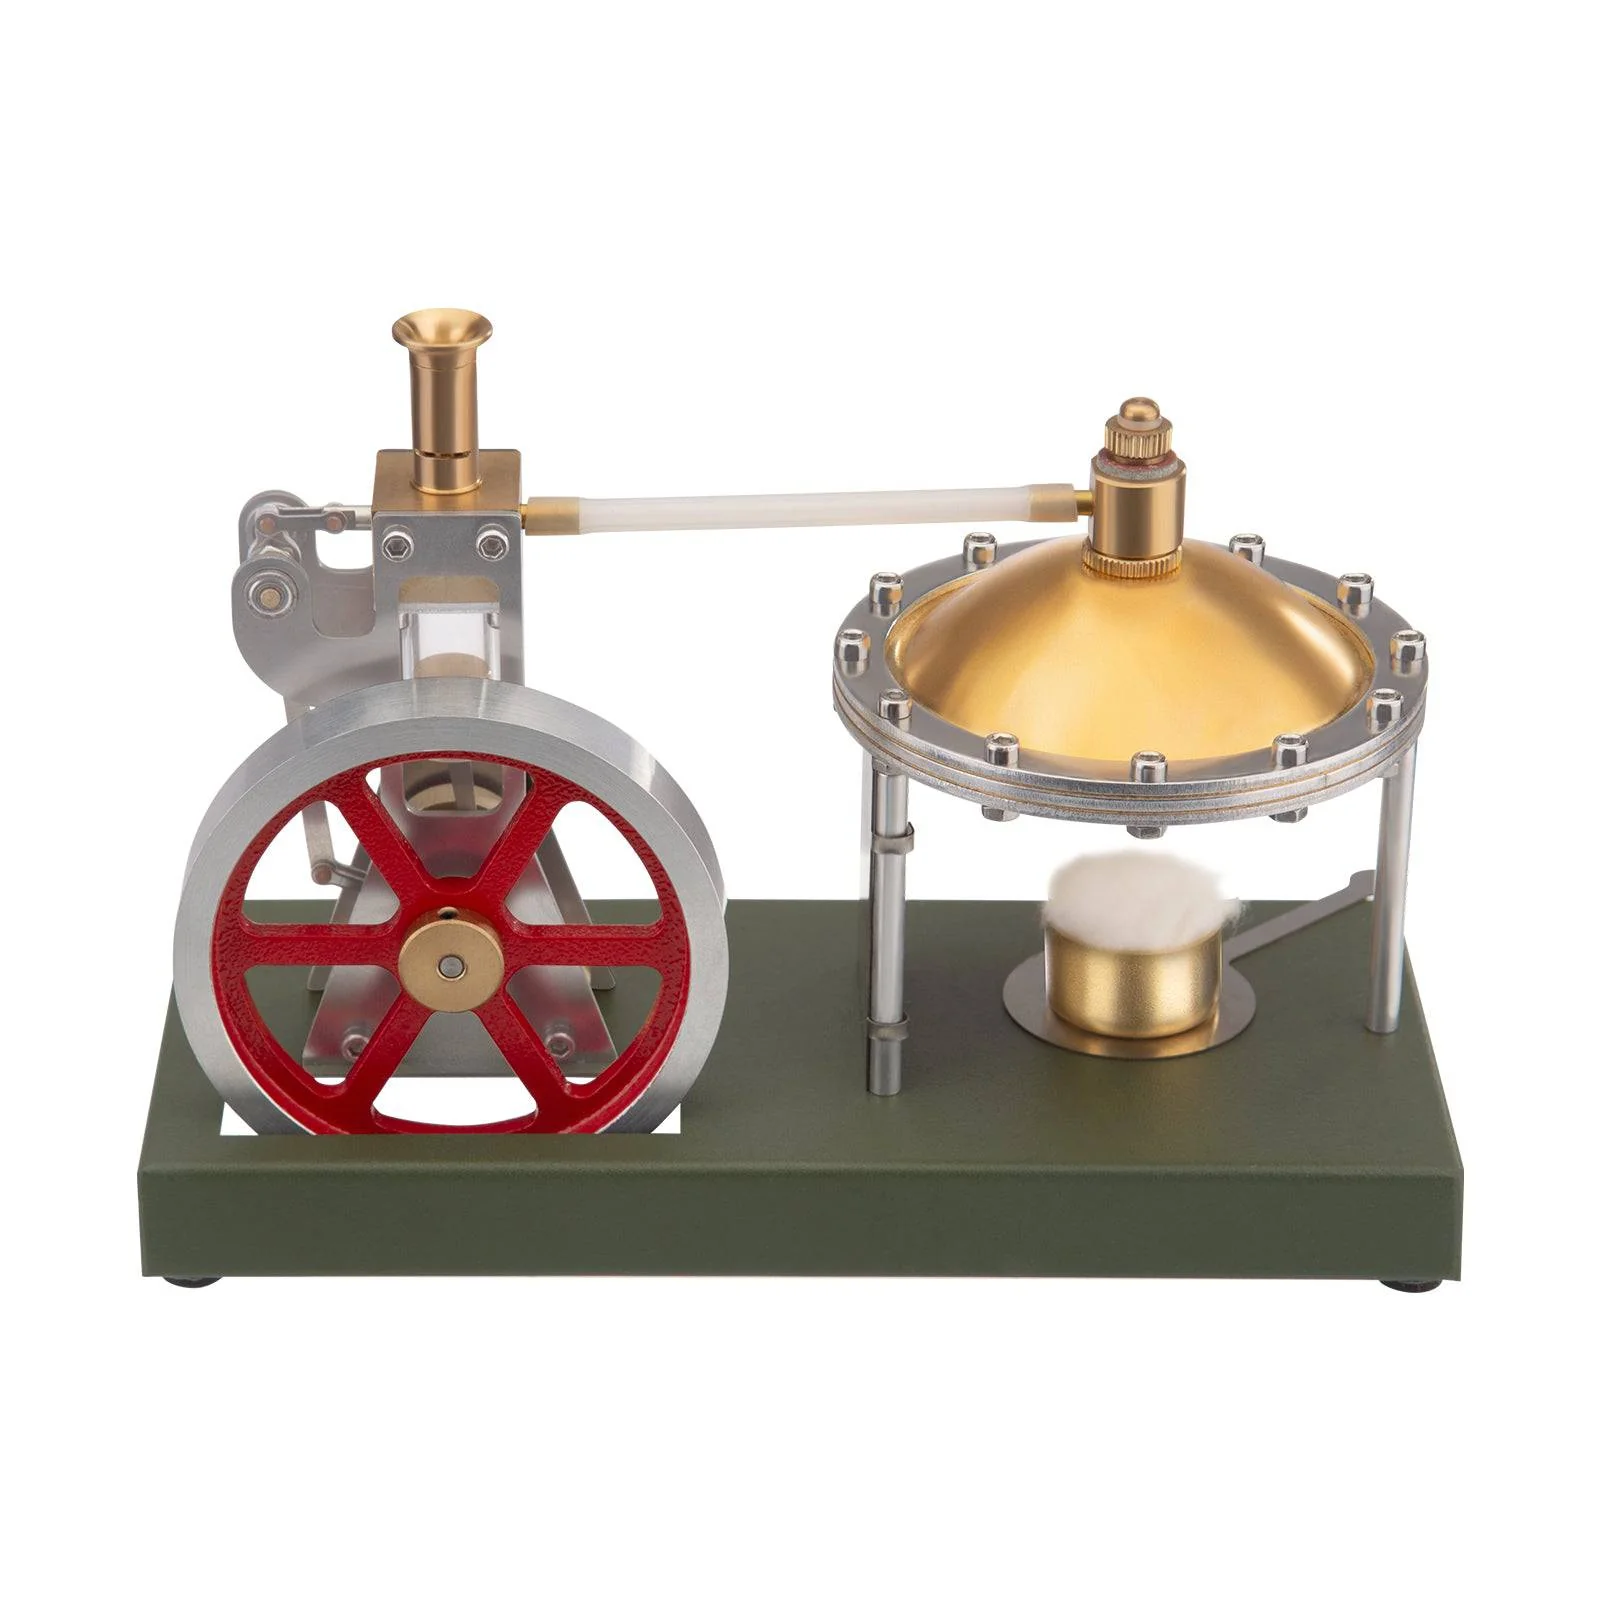 ENJOMOR Assembly Vertical Hero's Steam Engine Model with Boiler DIY KIT 1